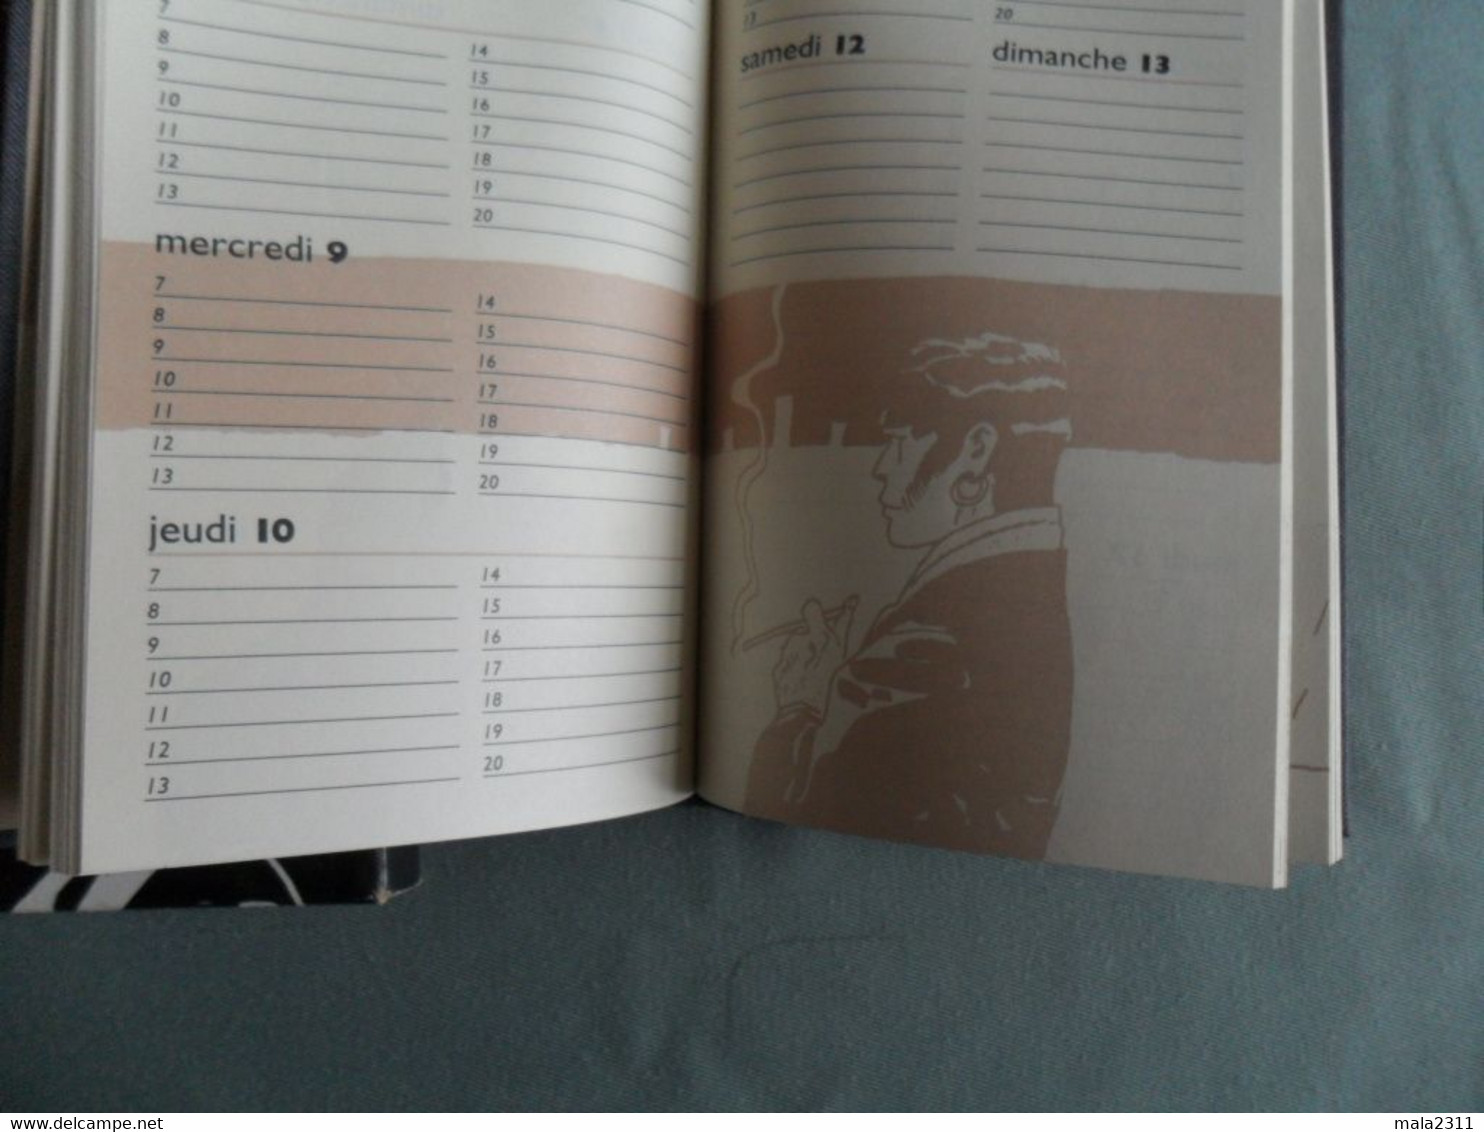 CORTO MALTESE - HUGO PRATT  /  Agenda 1992 Couverture Cartonnée / Dimension 9,5X16,5 Cm. / CASTERMAN - Agendas & Calendarios